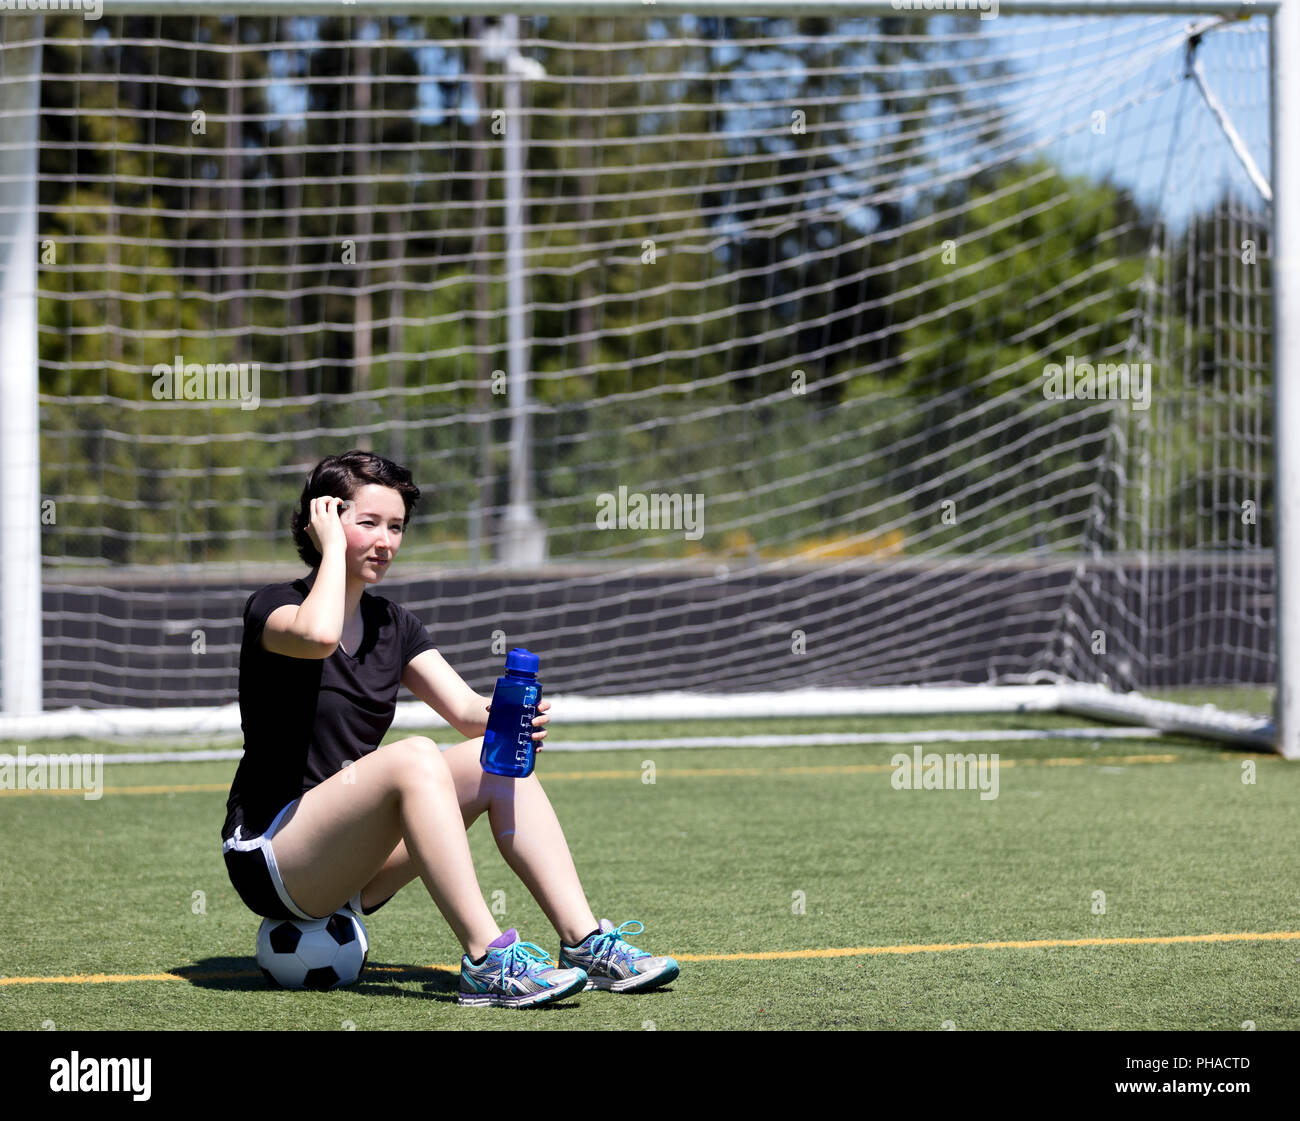 Teen girl resting on soccer ball while holding water bottle Stock Photo